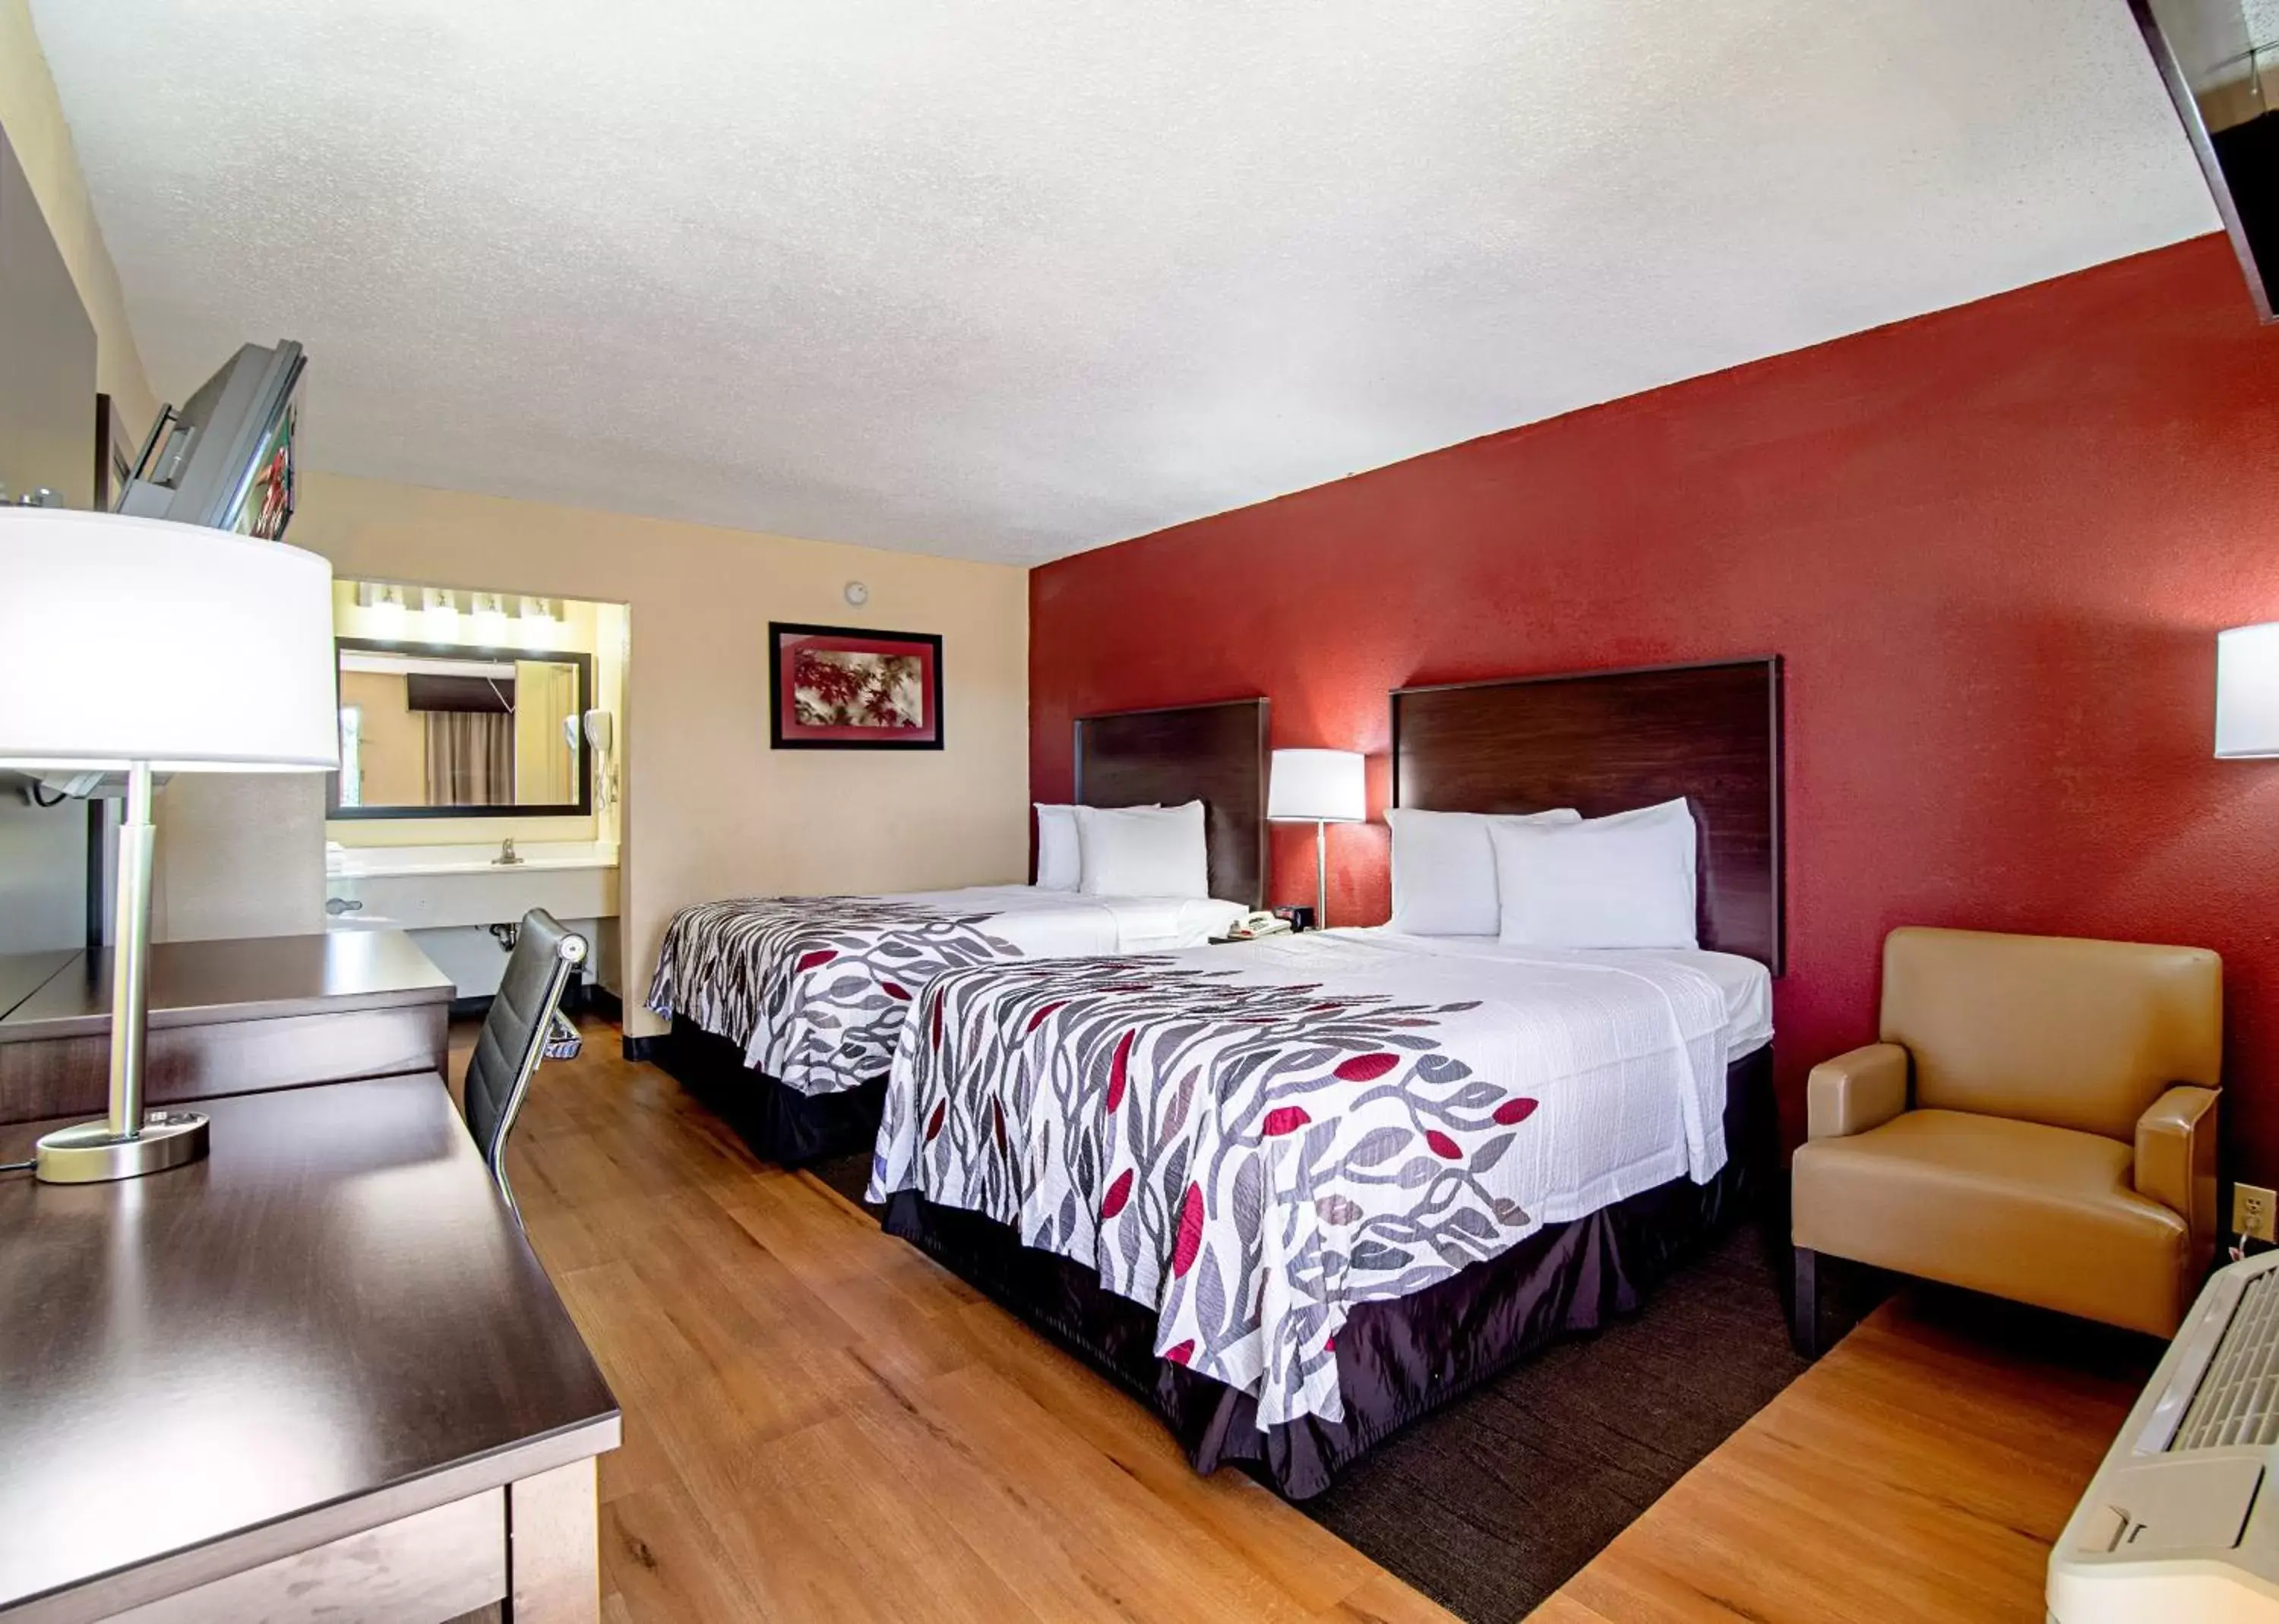 Bedroom, Room Photo in Red Roof Inn & Suites Greenwood, SC